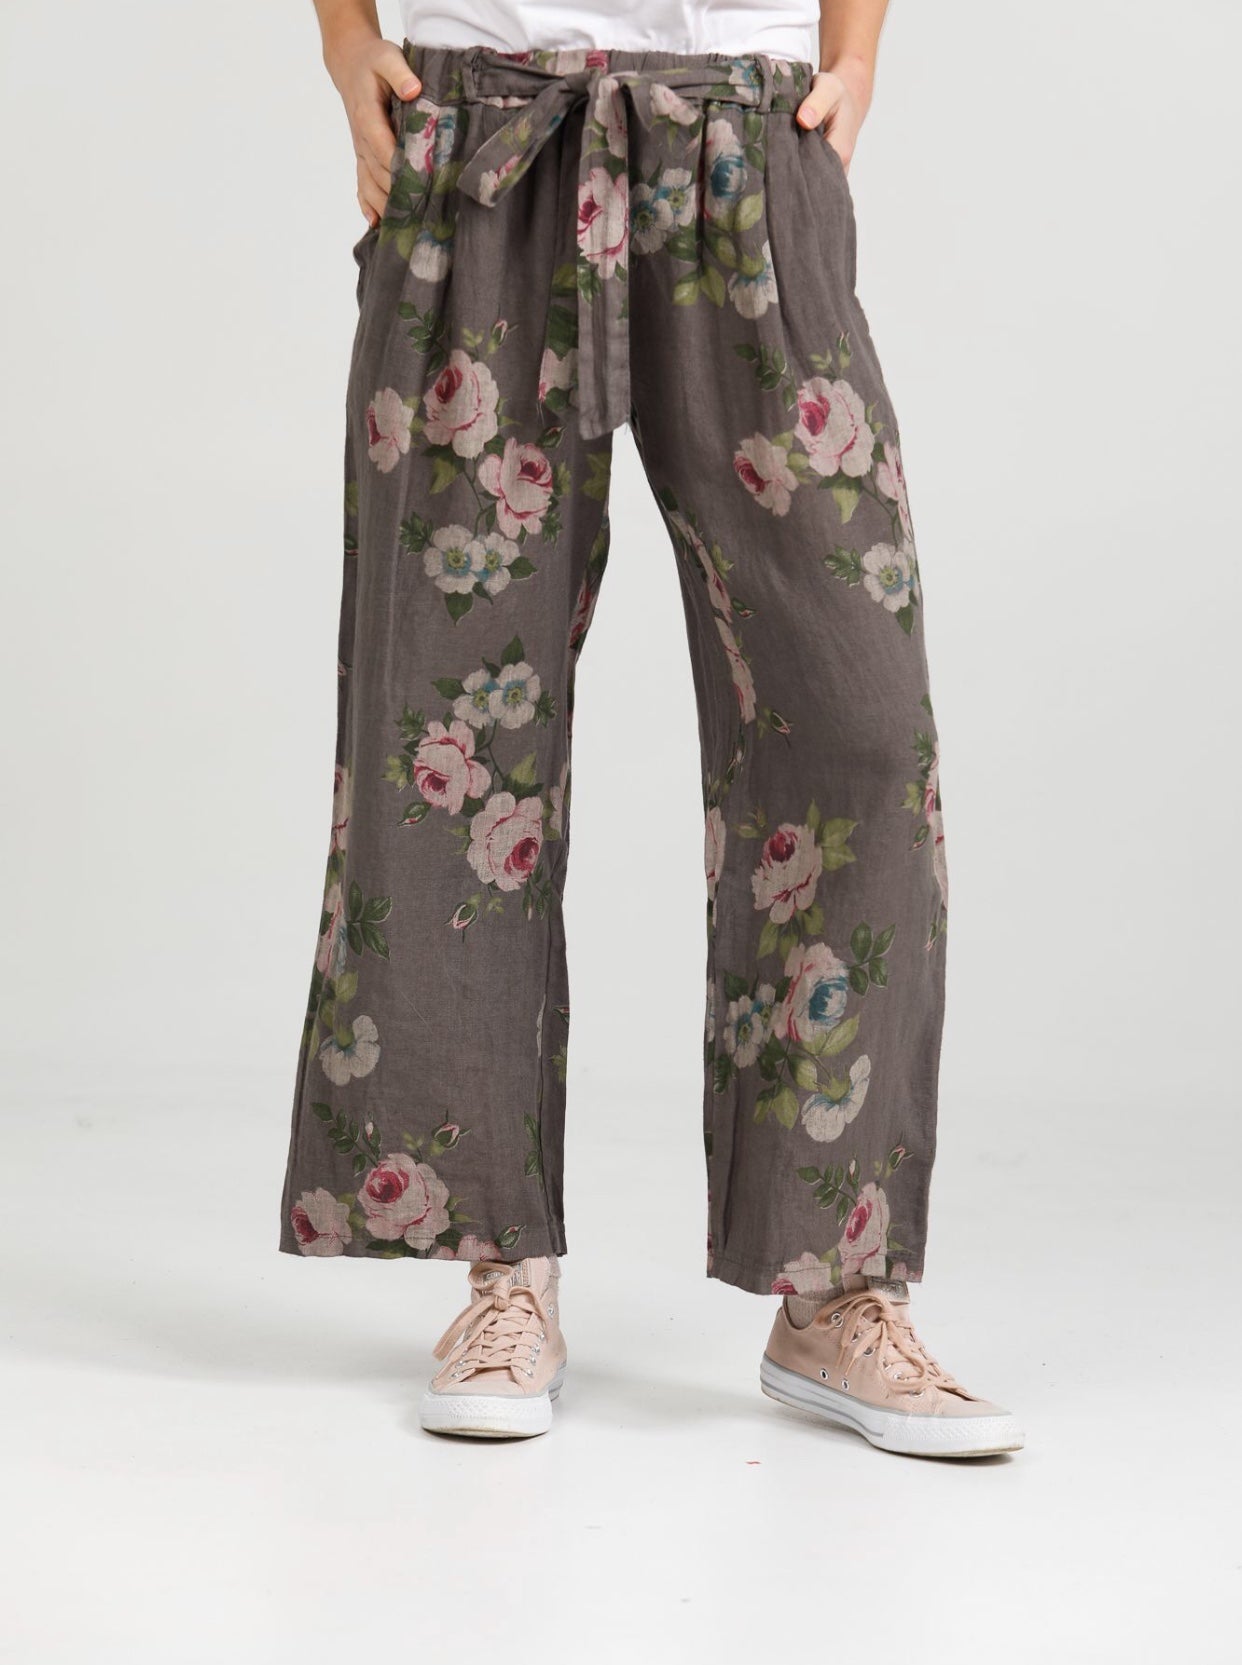 Eva linen floral Pants. Charcoal